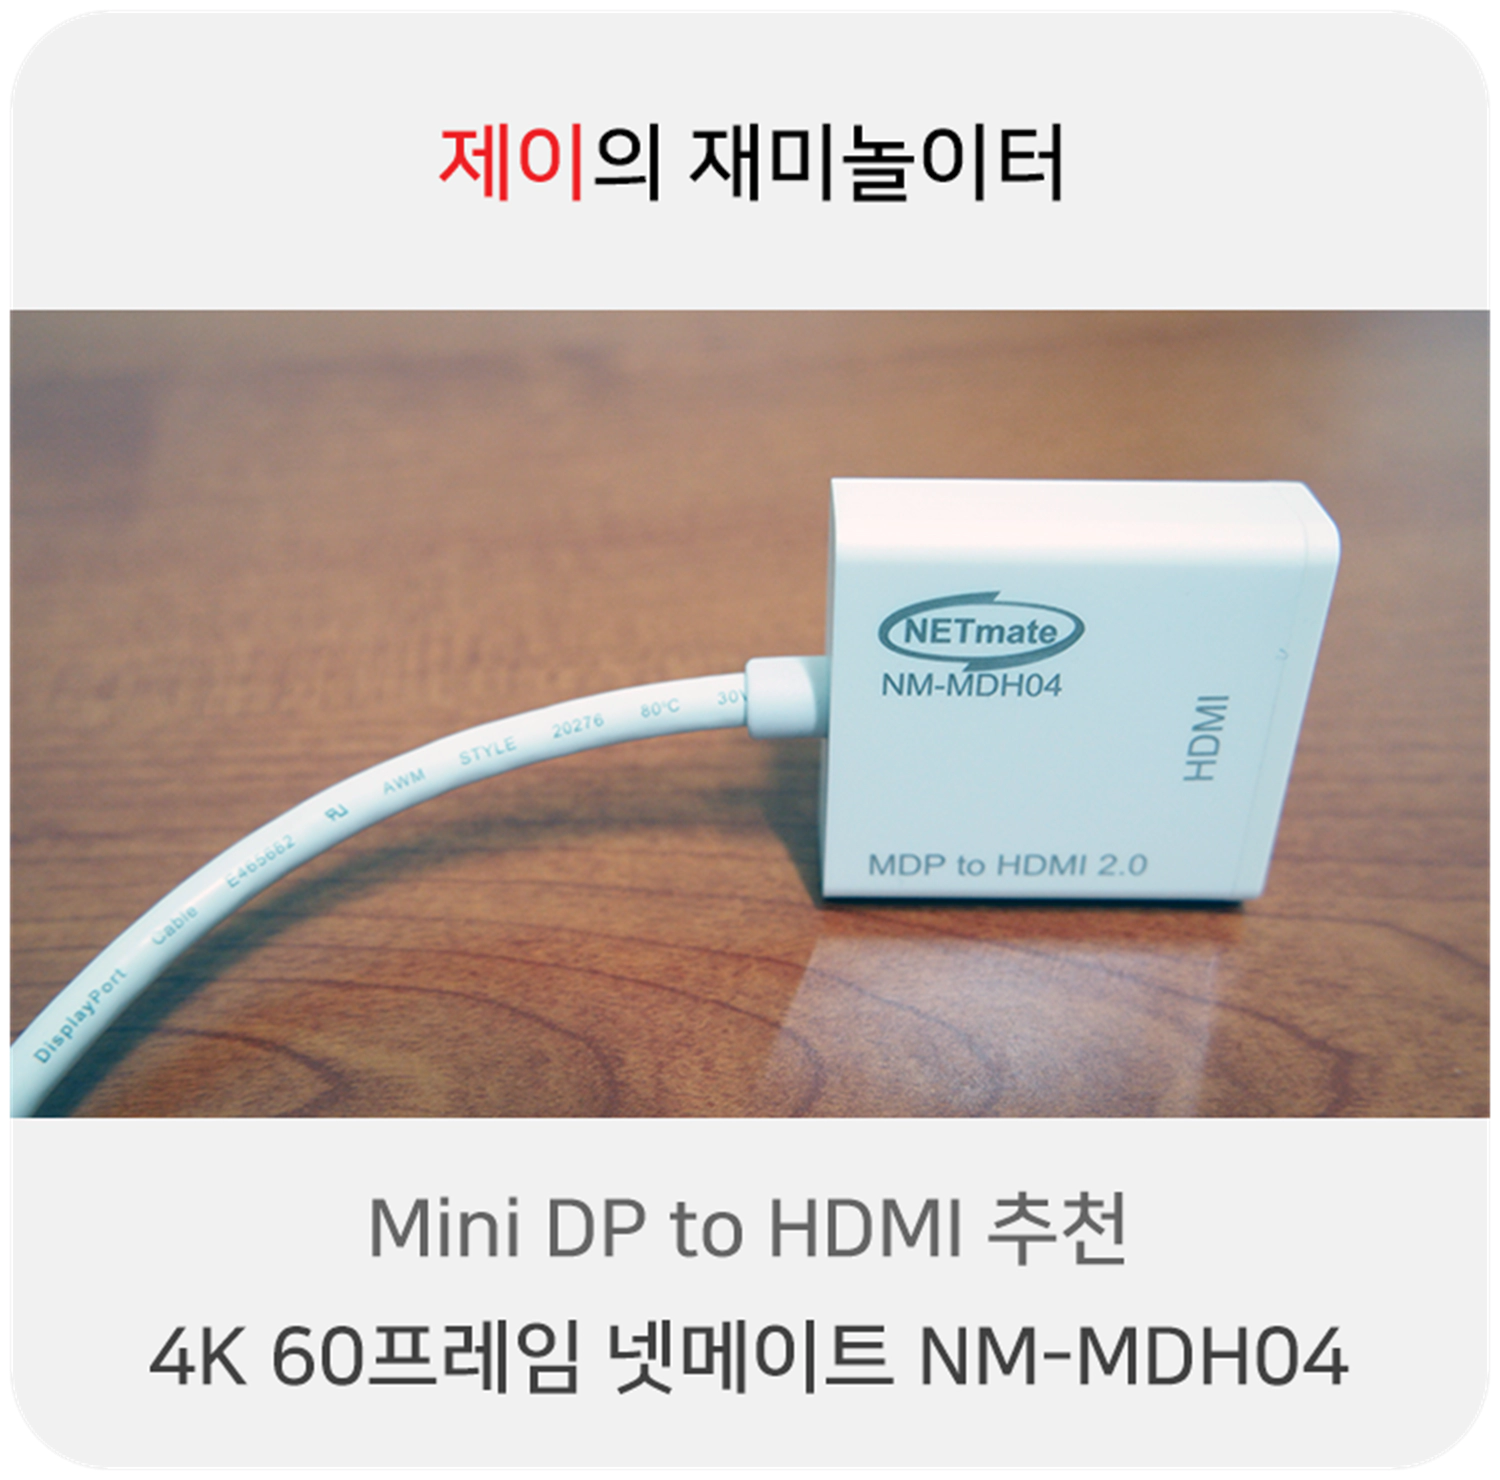 Mini DP to HDMI 추천, 4K 60프레임 넷메이트 NM-MDH04